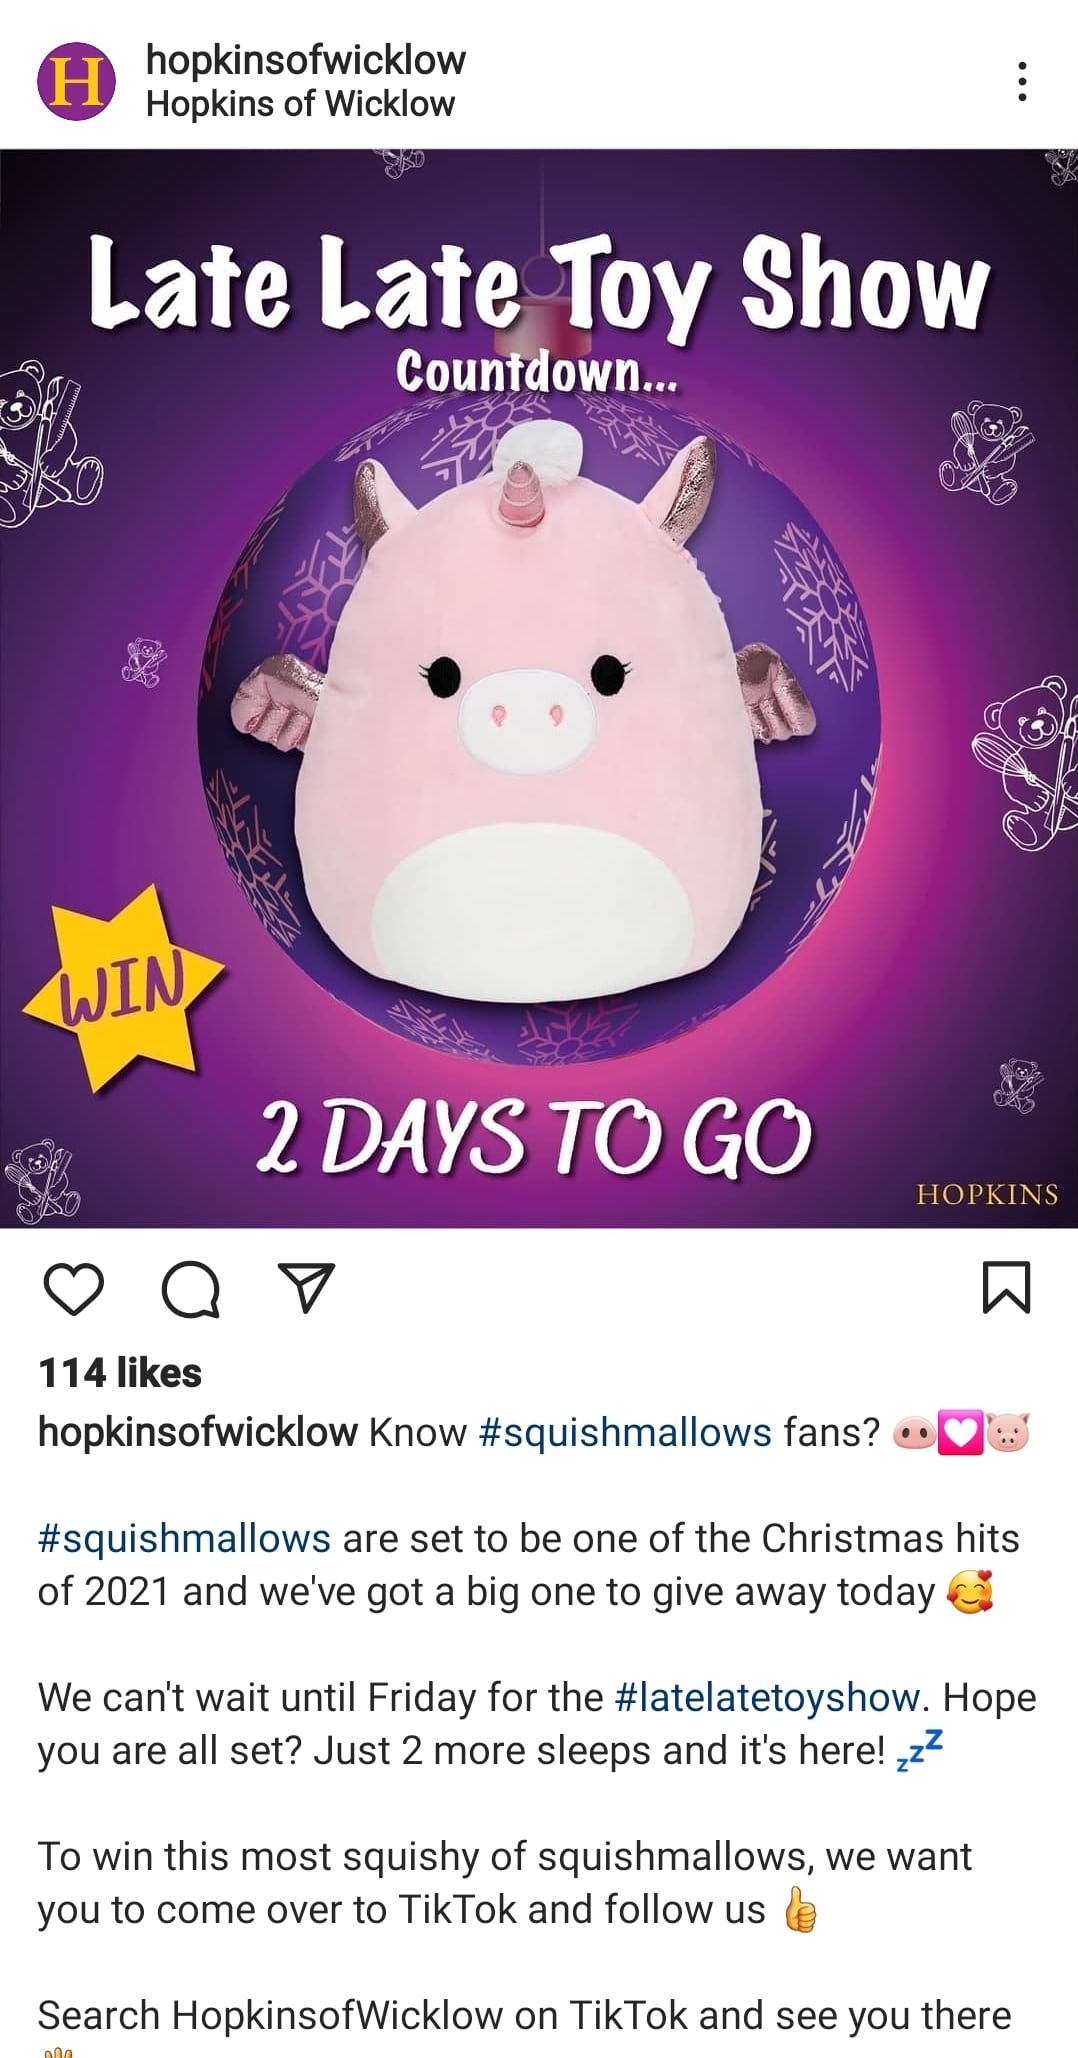 Hopkins toy shop Instagram sample posts 2 days to go